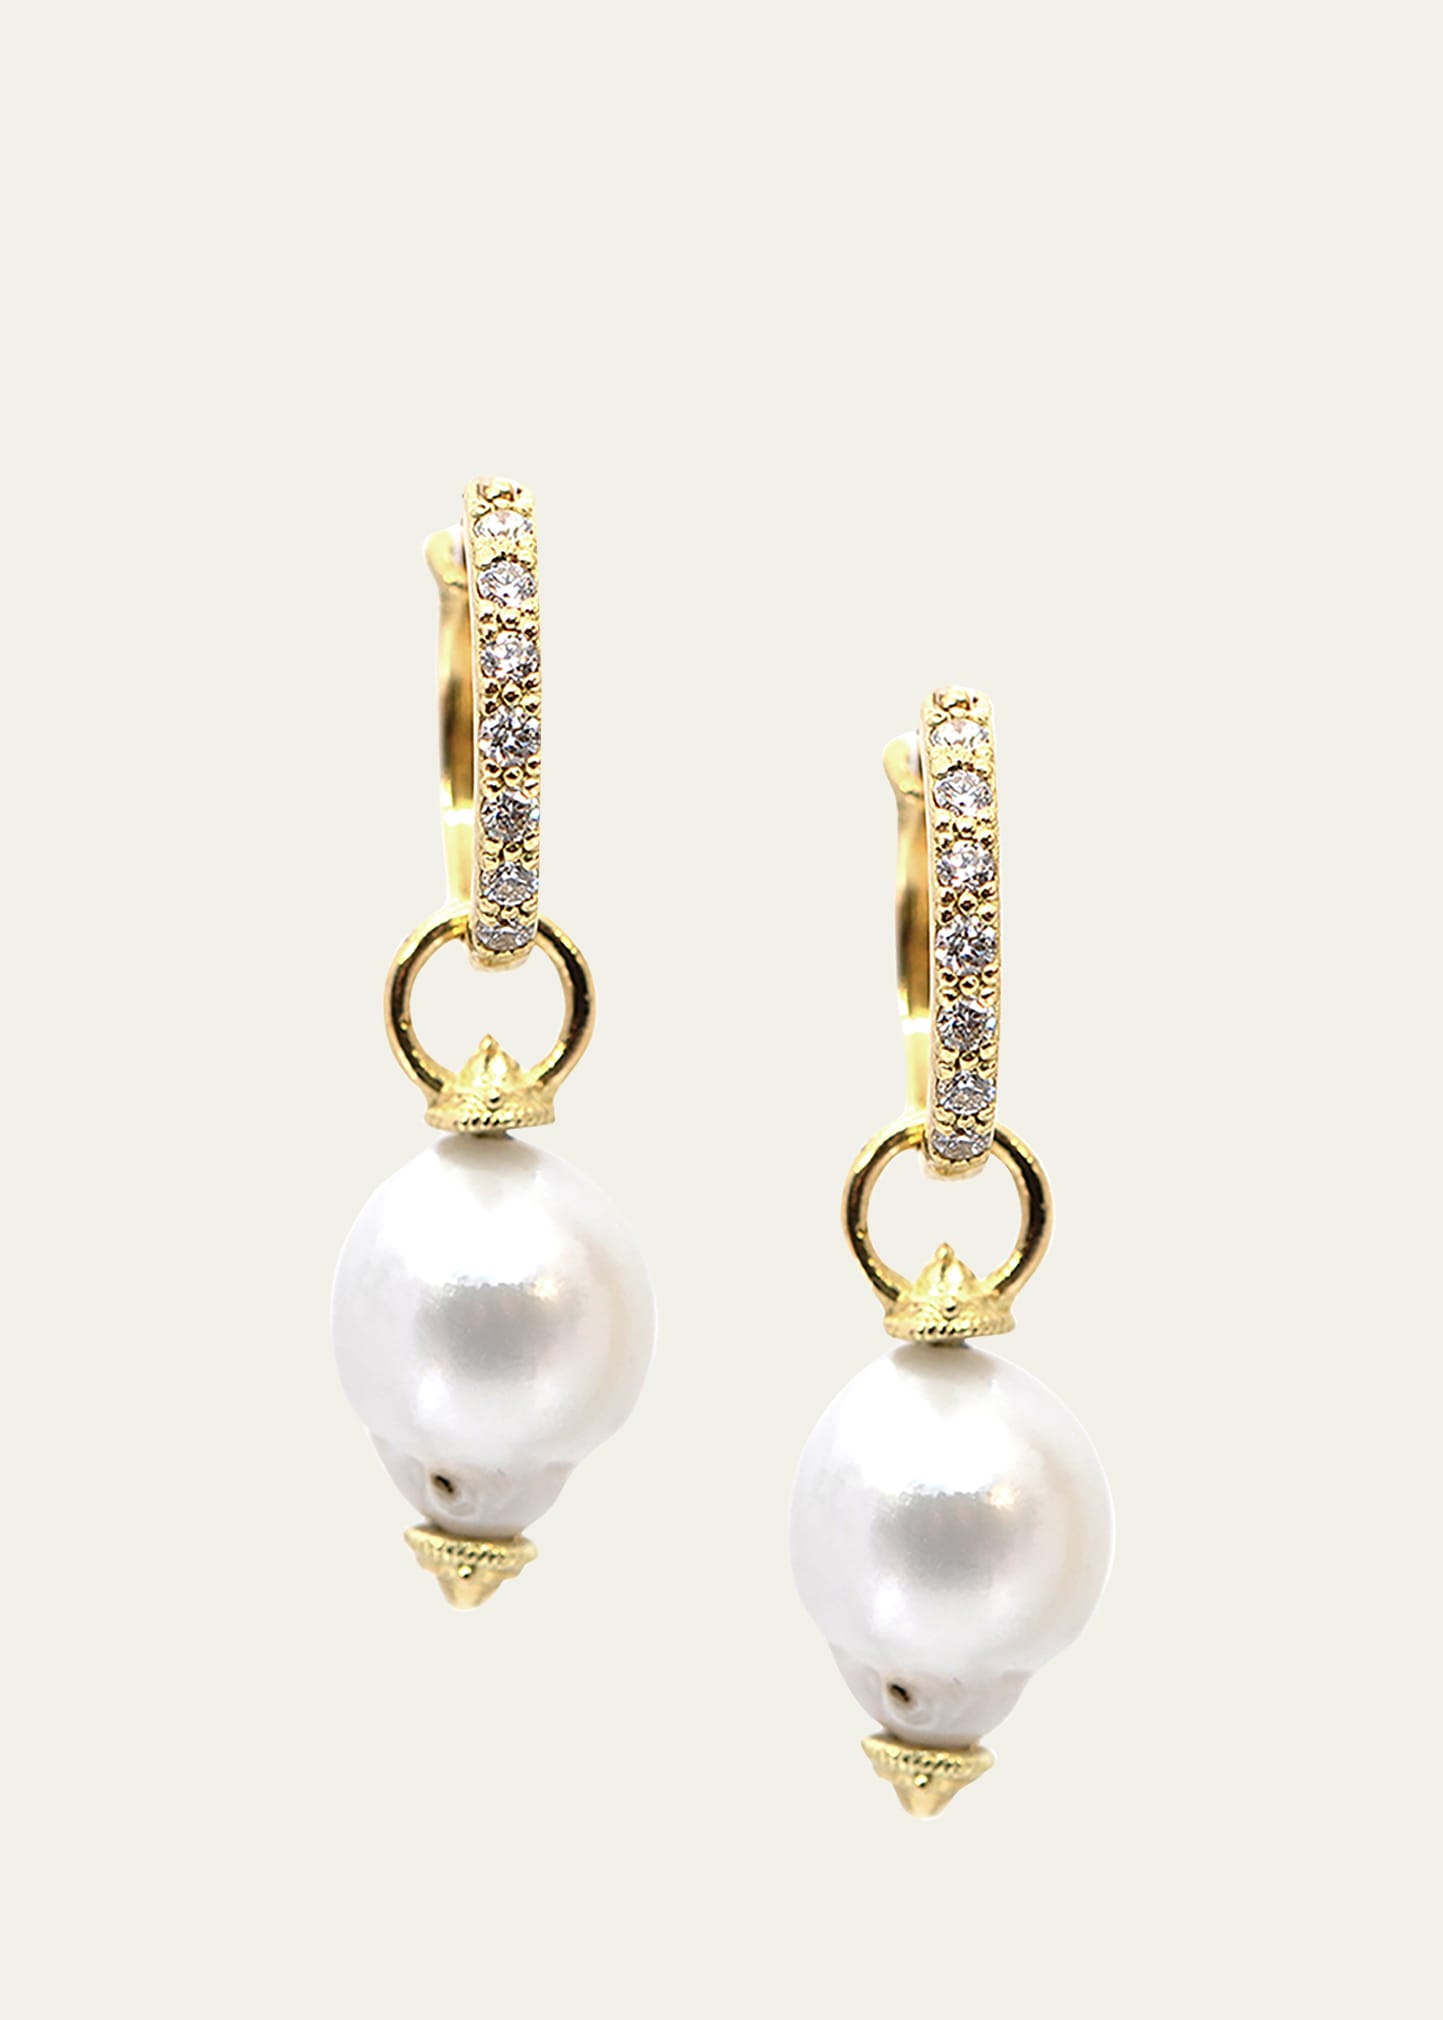 Armenta Sueno 16mm Pave Huggie Earrings with Pearl Drops